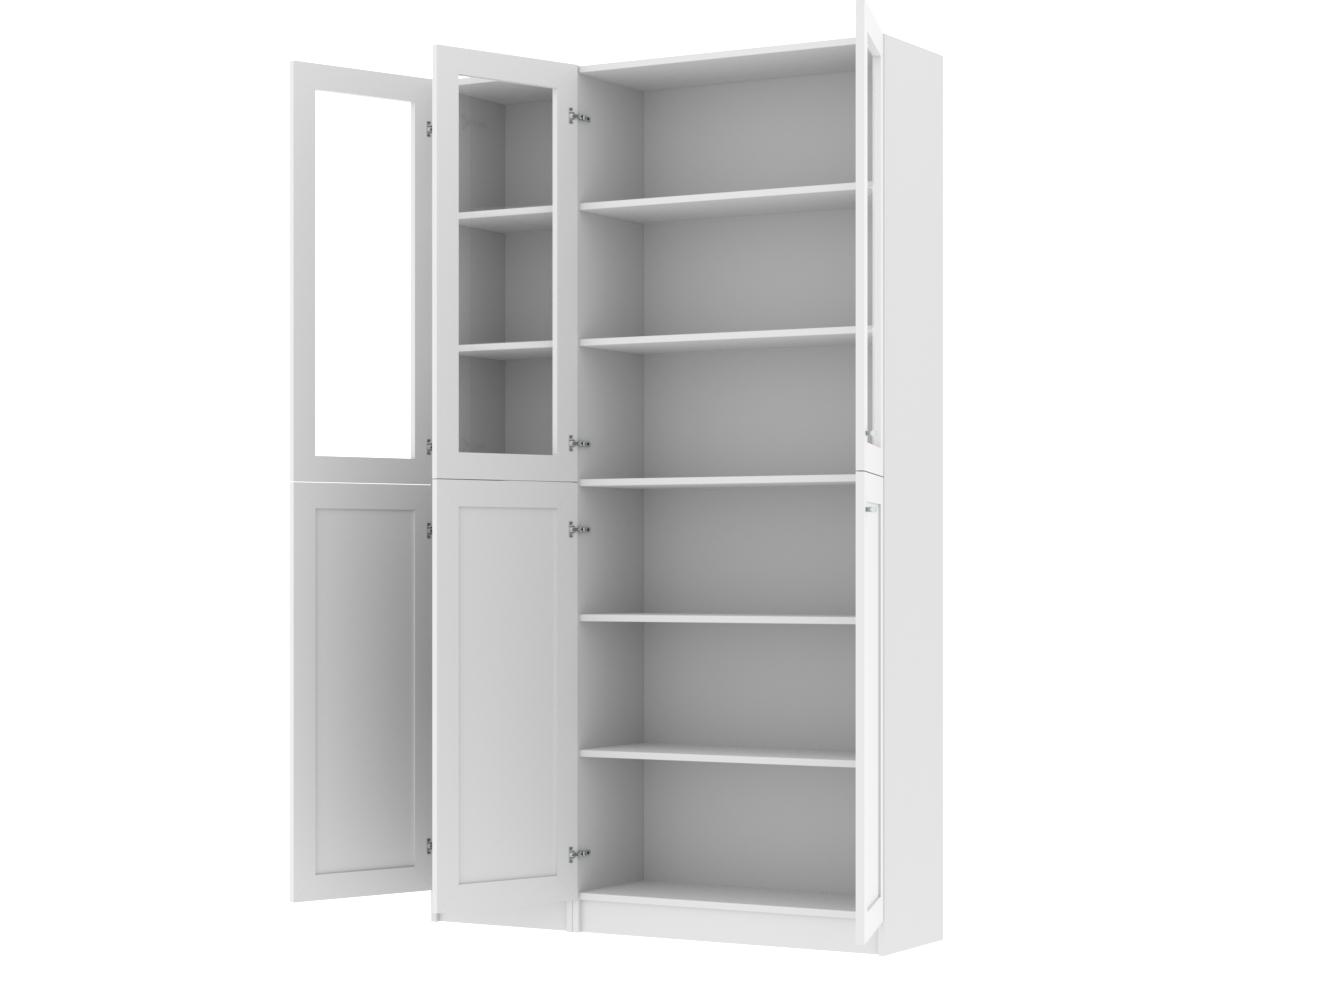  Книжный шкаф Билли 392 white desire ИКЕА (IKEA) изображение товара